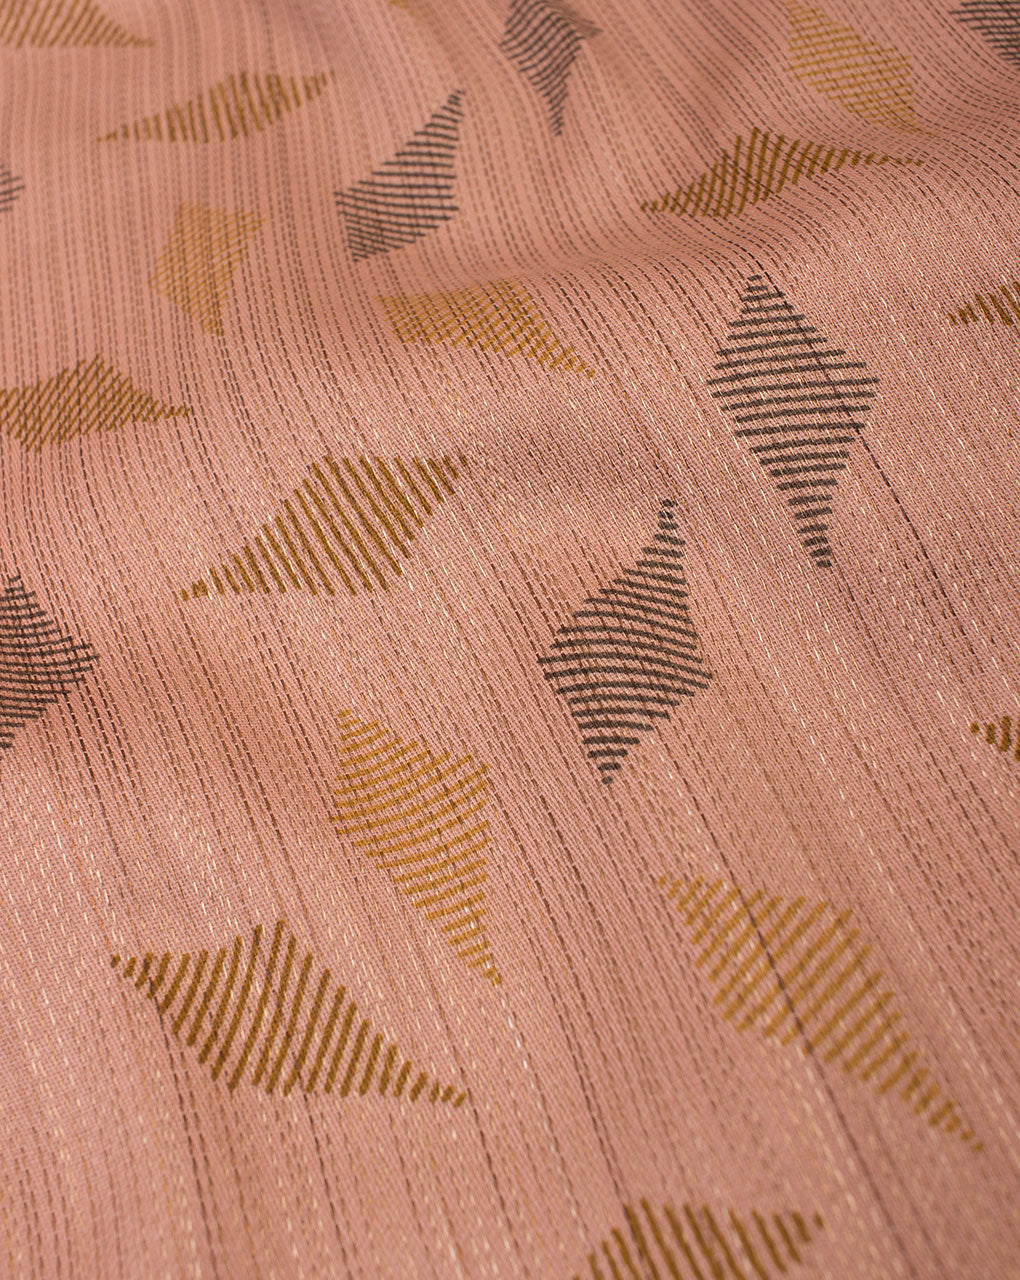 Salmon Brown Geometric Foil Screen Print Poly Cotton Fabric - Fabriclore.com